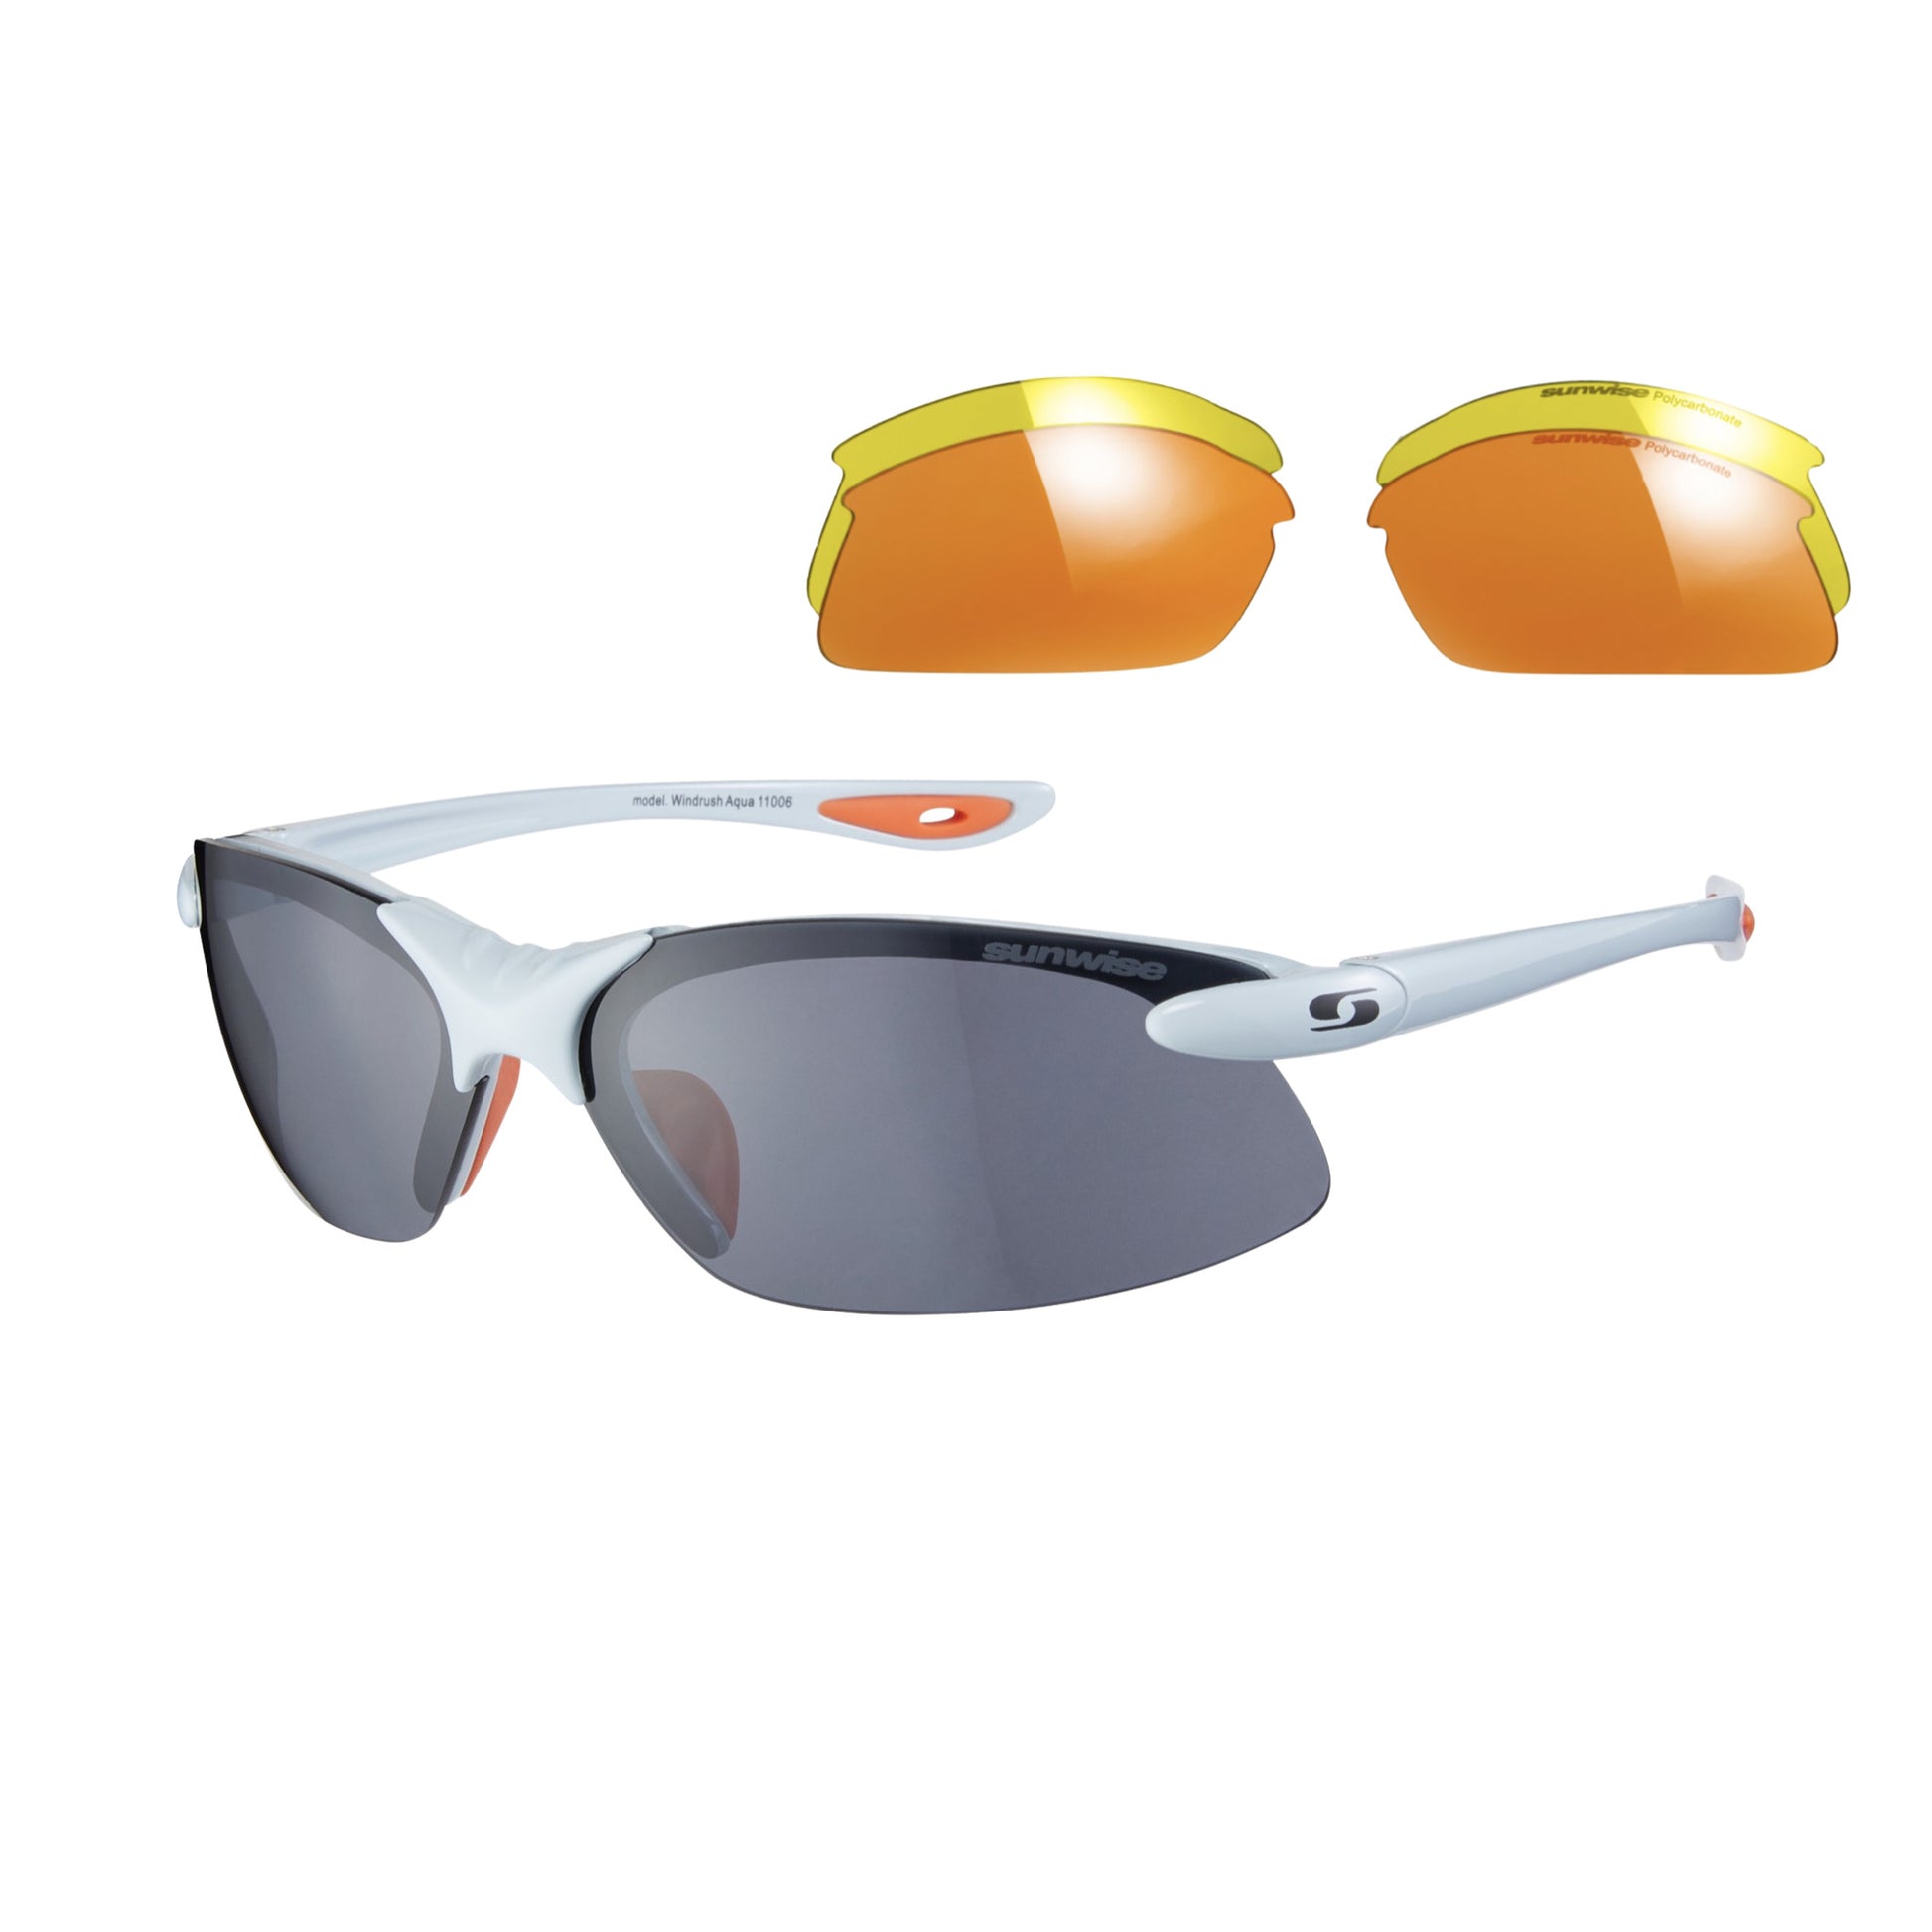 Sunwise sports sunglasses, Windrush, aqua with additional lenses